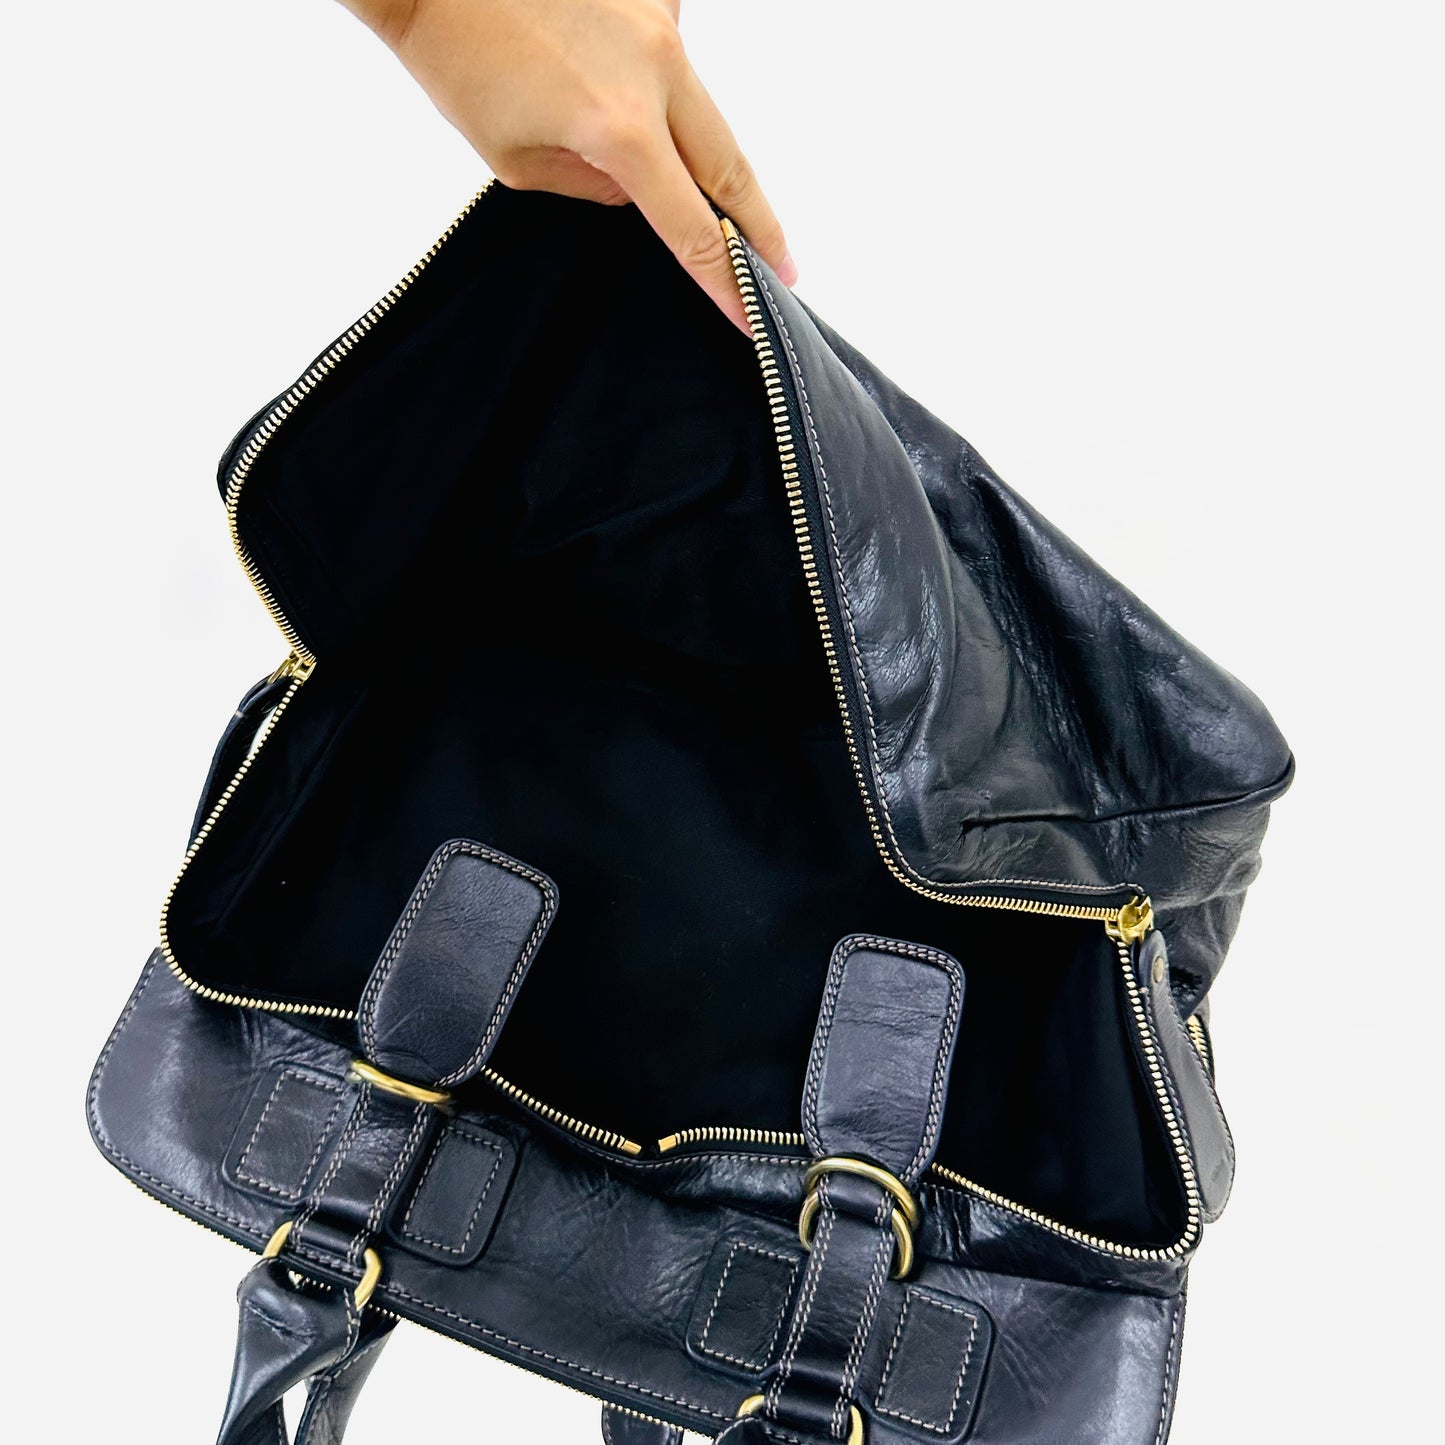 Chloe Black GHW Bahrain Leather Classic Monogram Logo Zip Shoulder Shopper Tote Bag